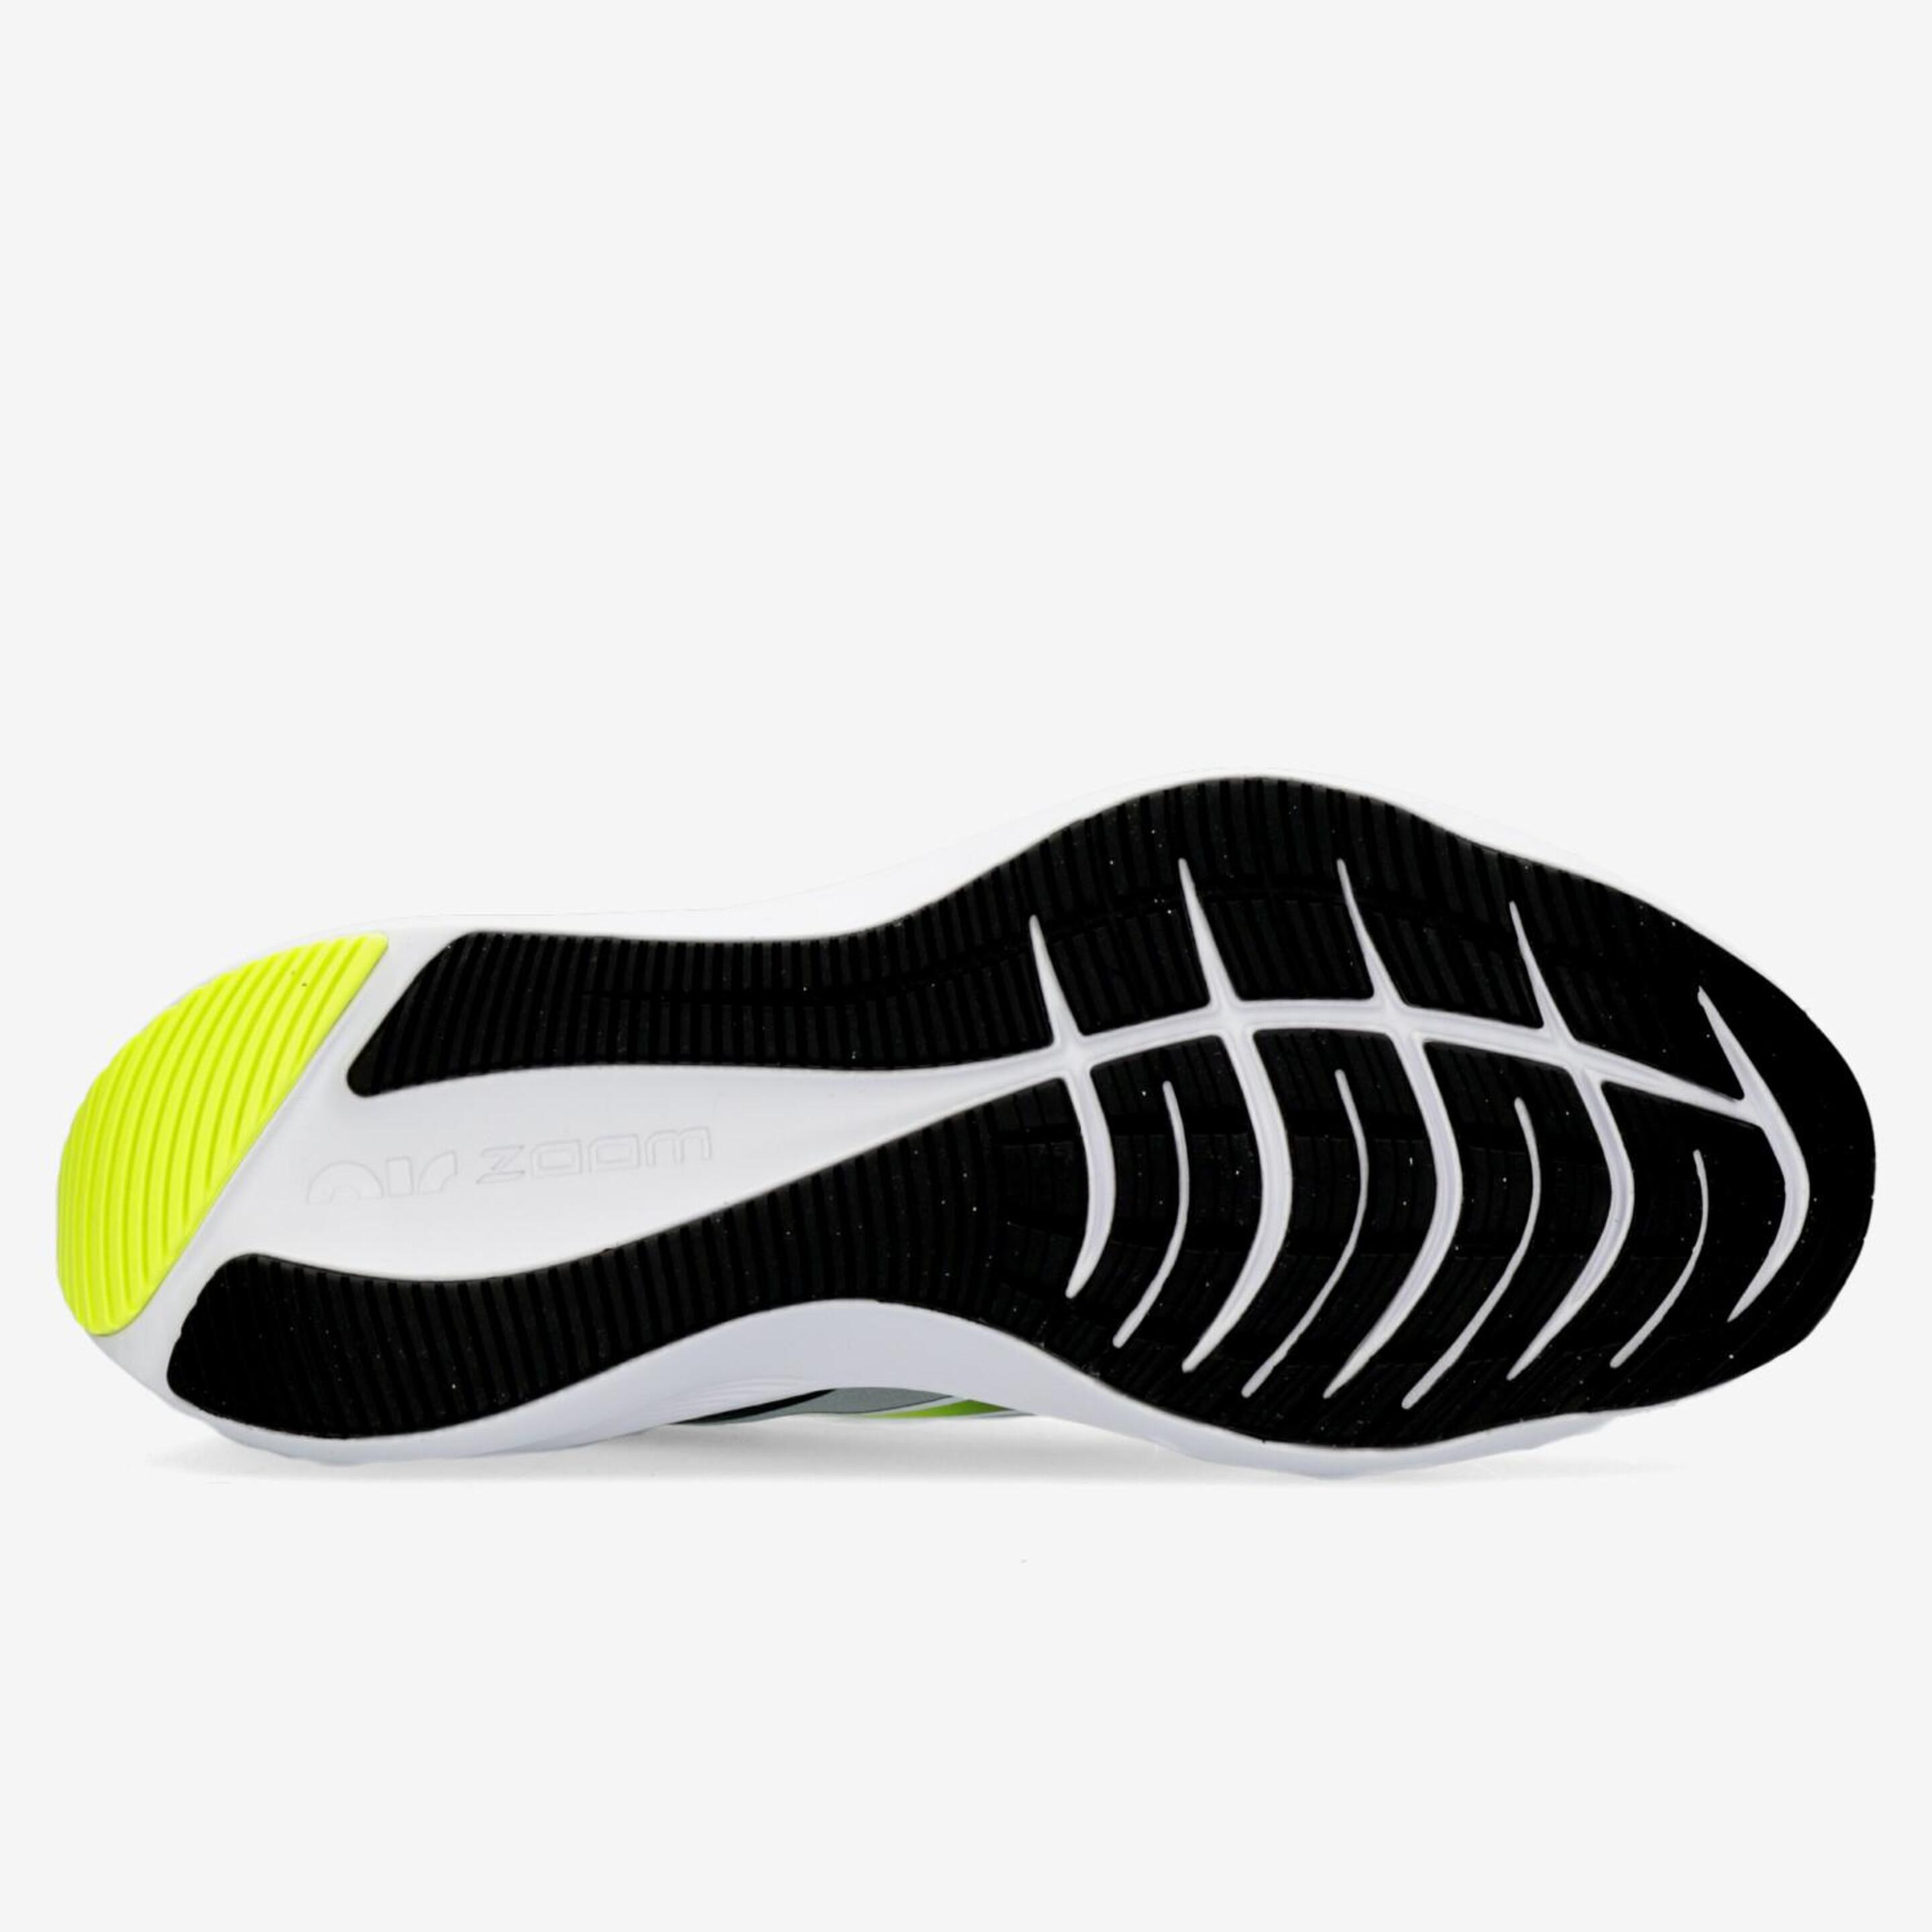 Nike Air Zoom Winflo 7